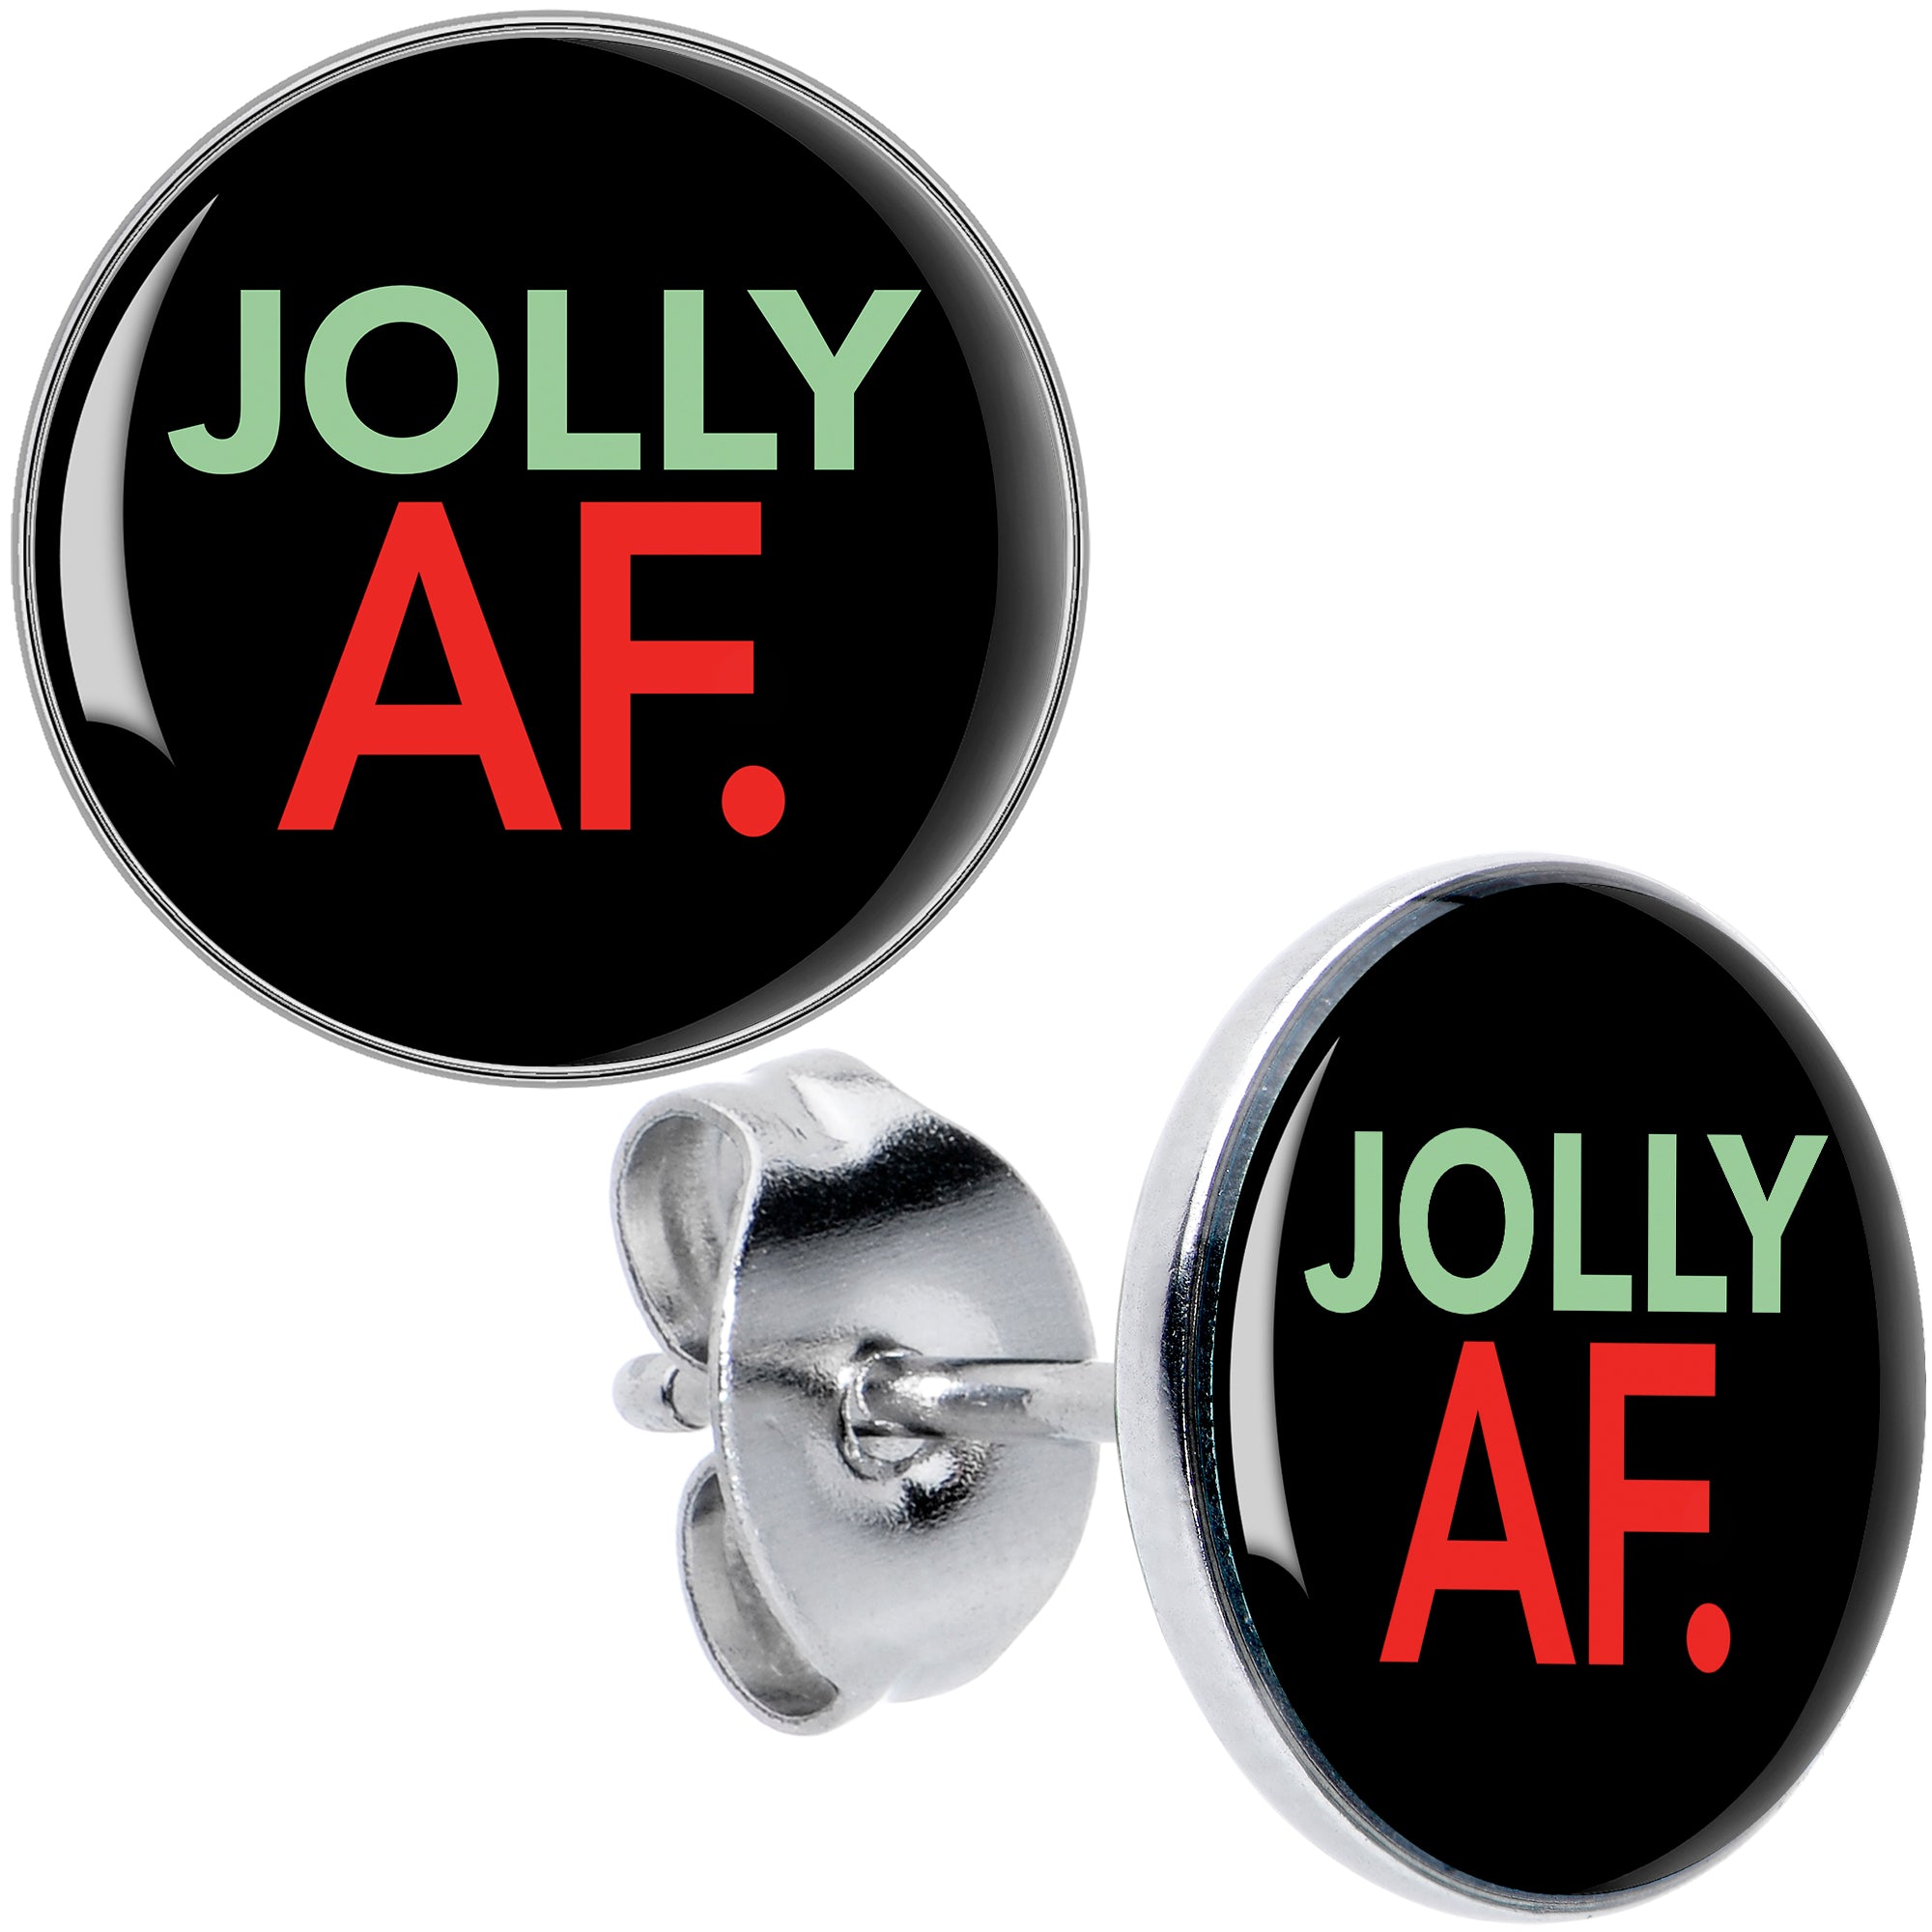 Jolly AF Festive Holiday Christmas Stud Earrings